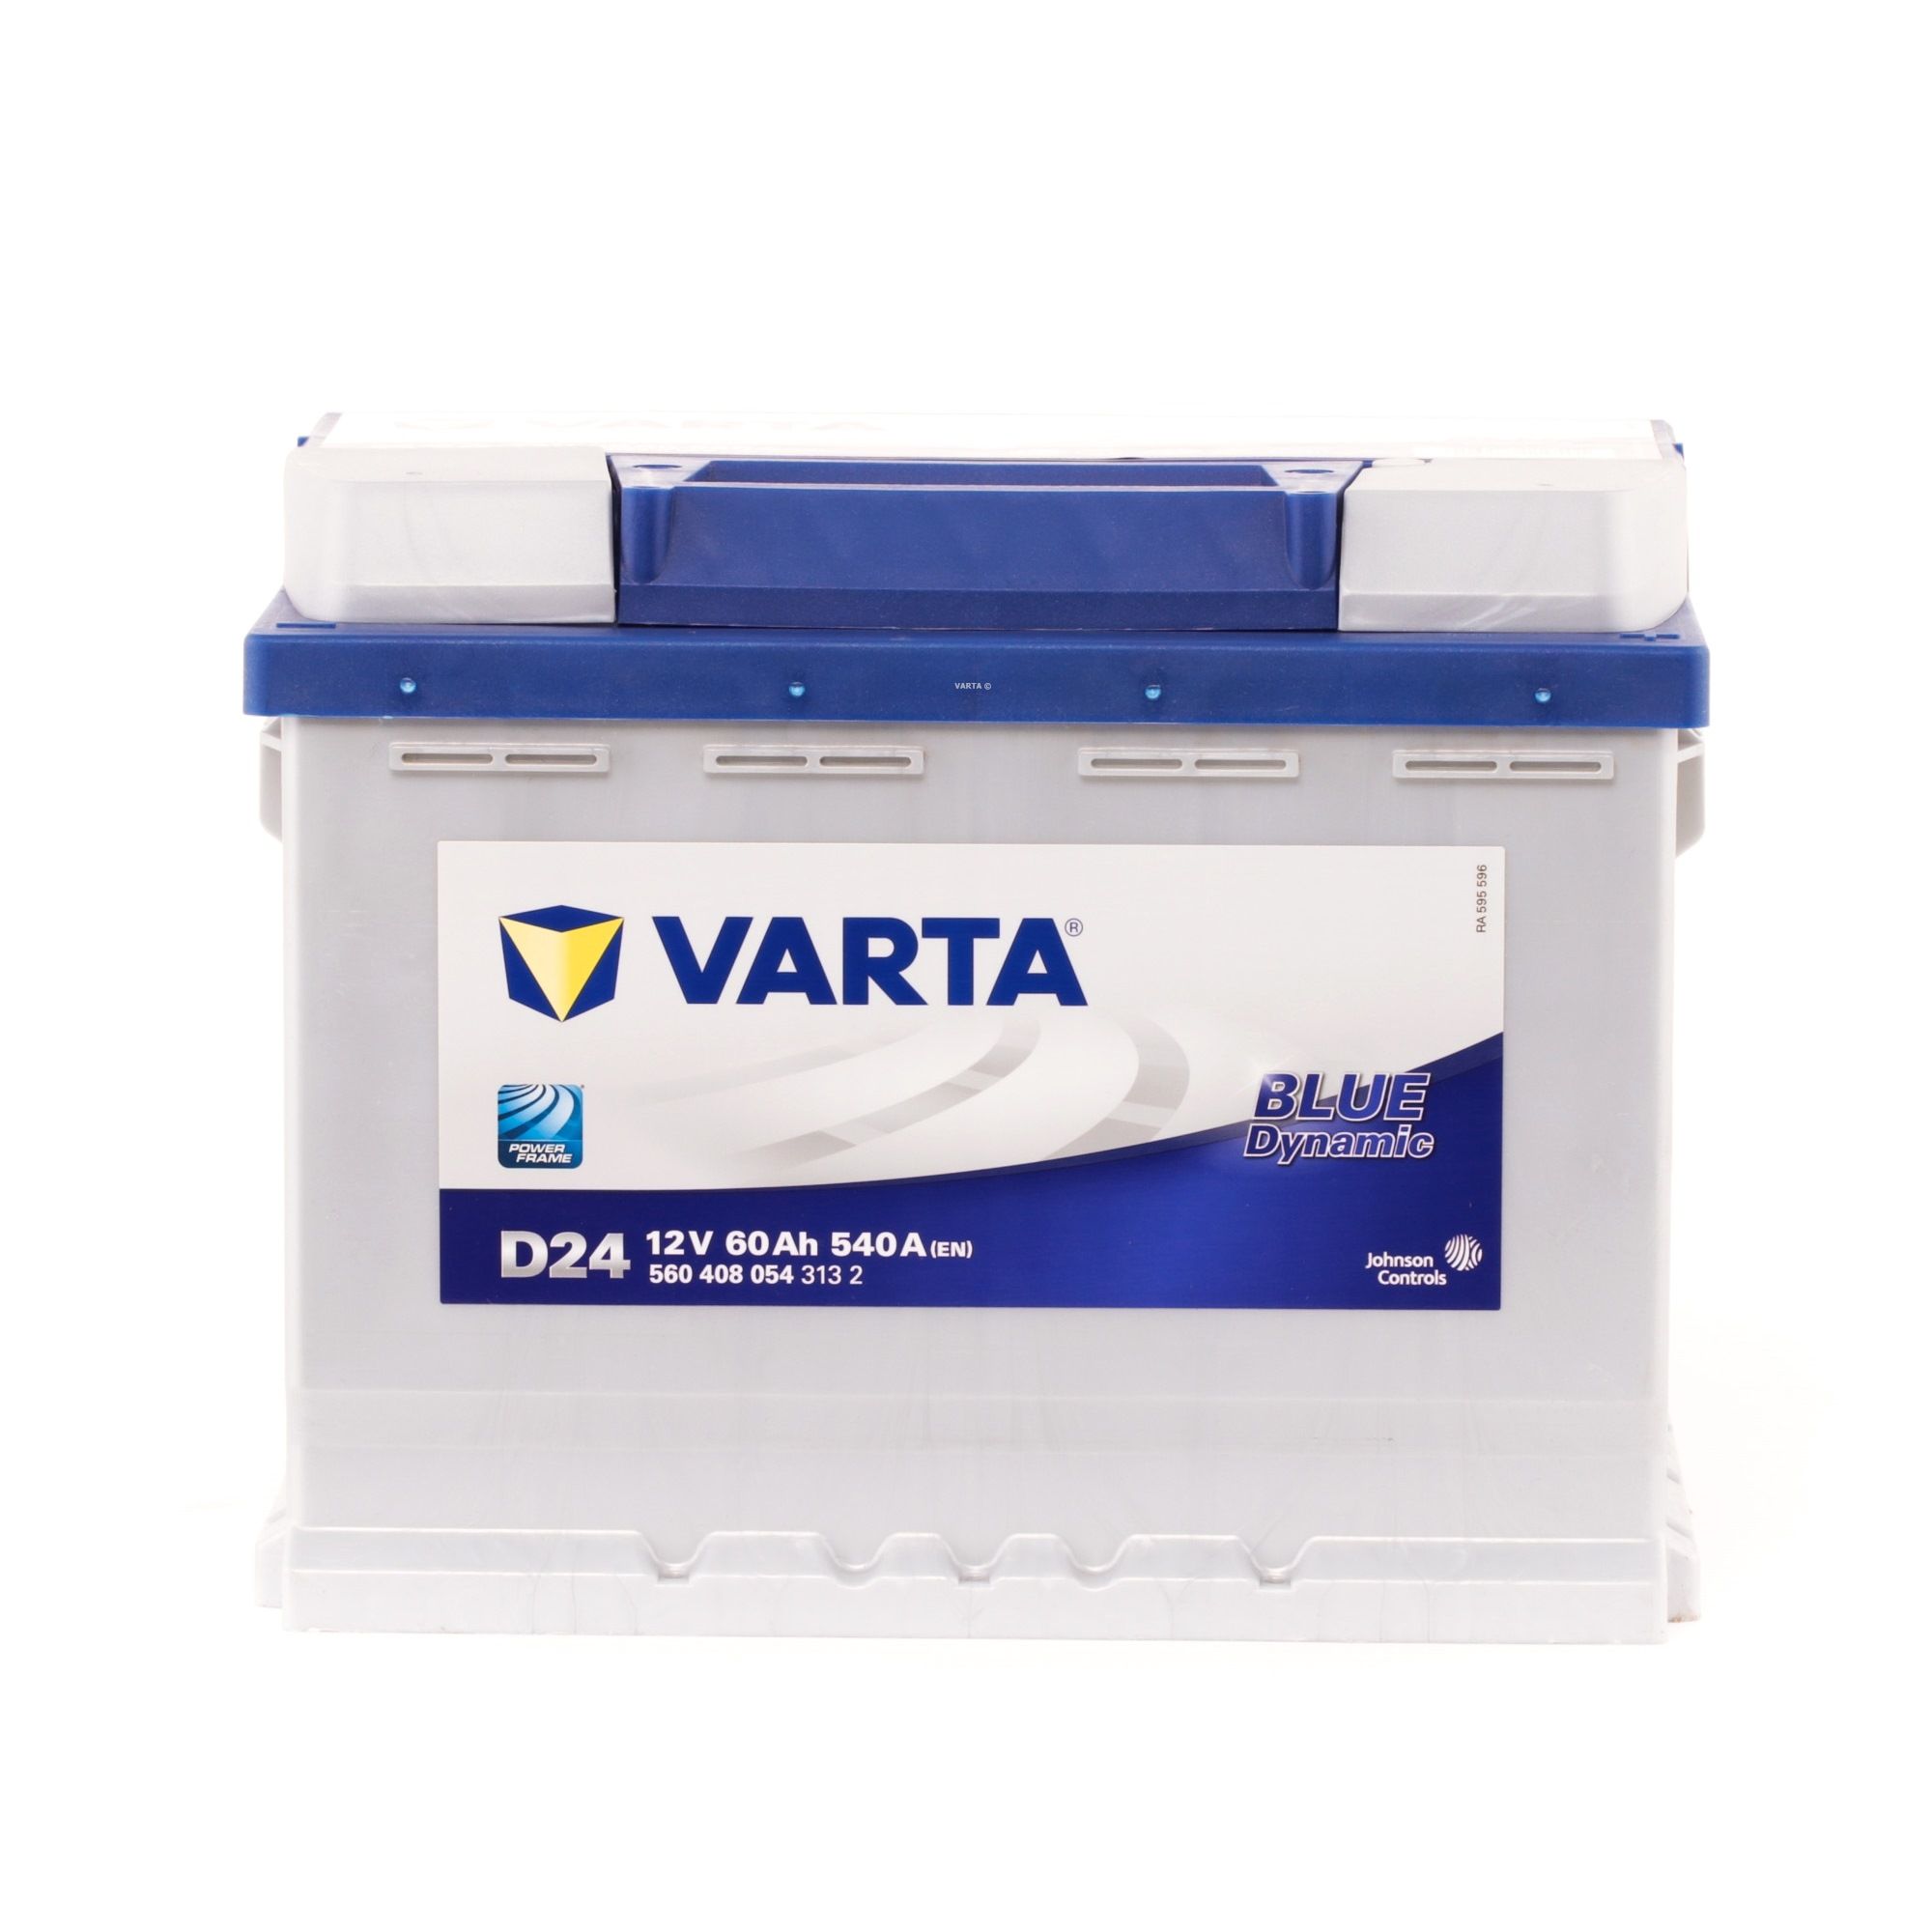 VARTA 5604080543132 originais SEAT Batería 12V 60Ah 540A B13 Bateria chumbo-ácido